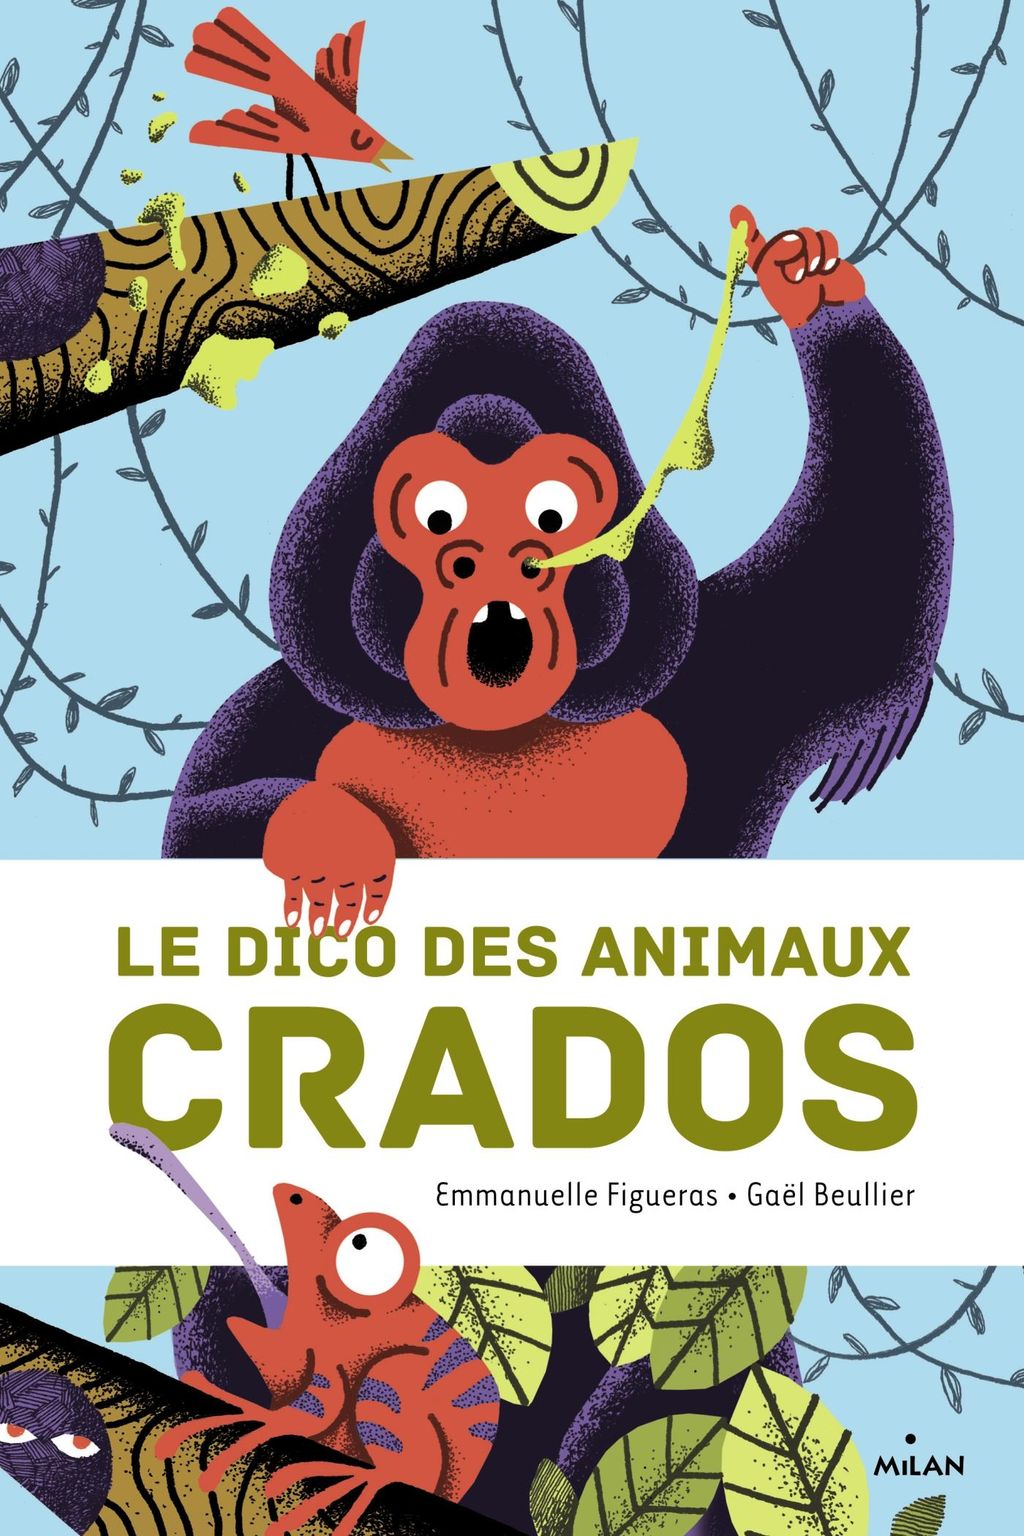 « Le dico des animaux crados » cover